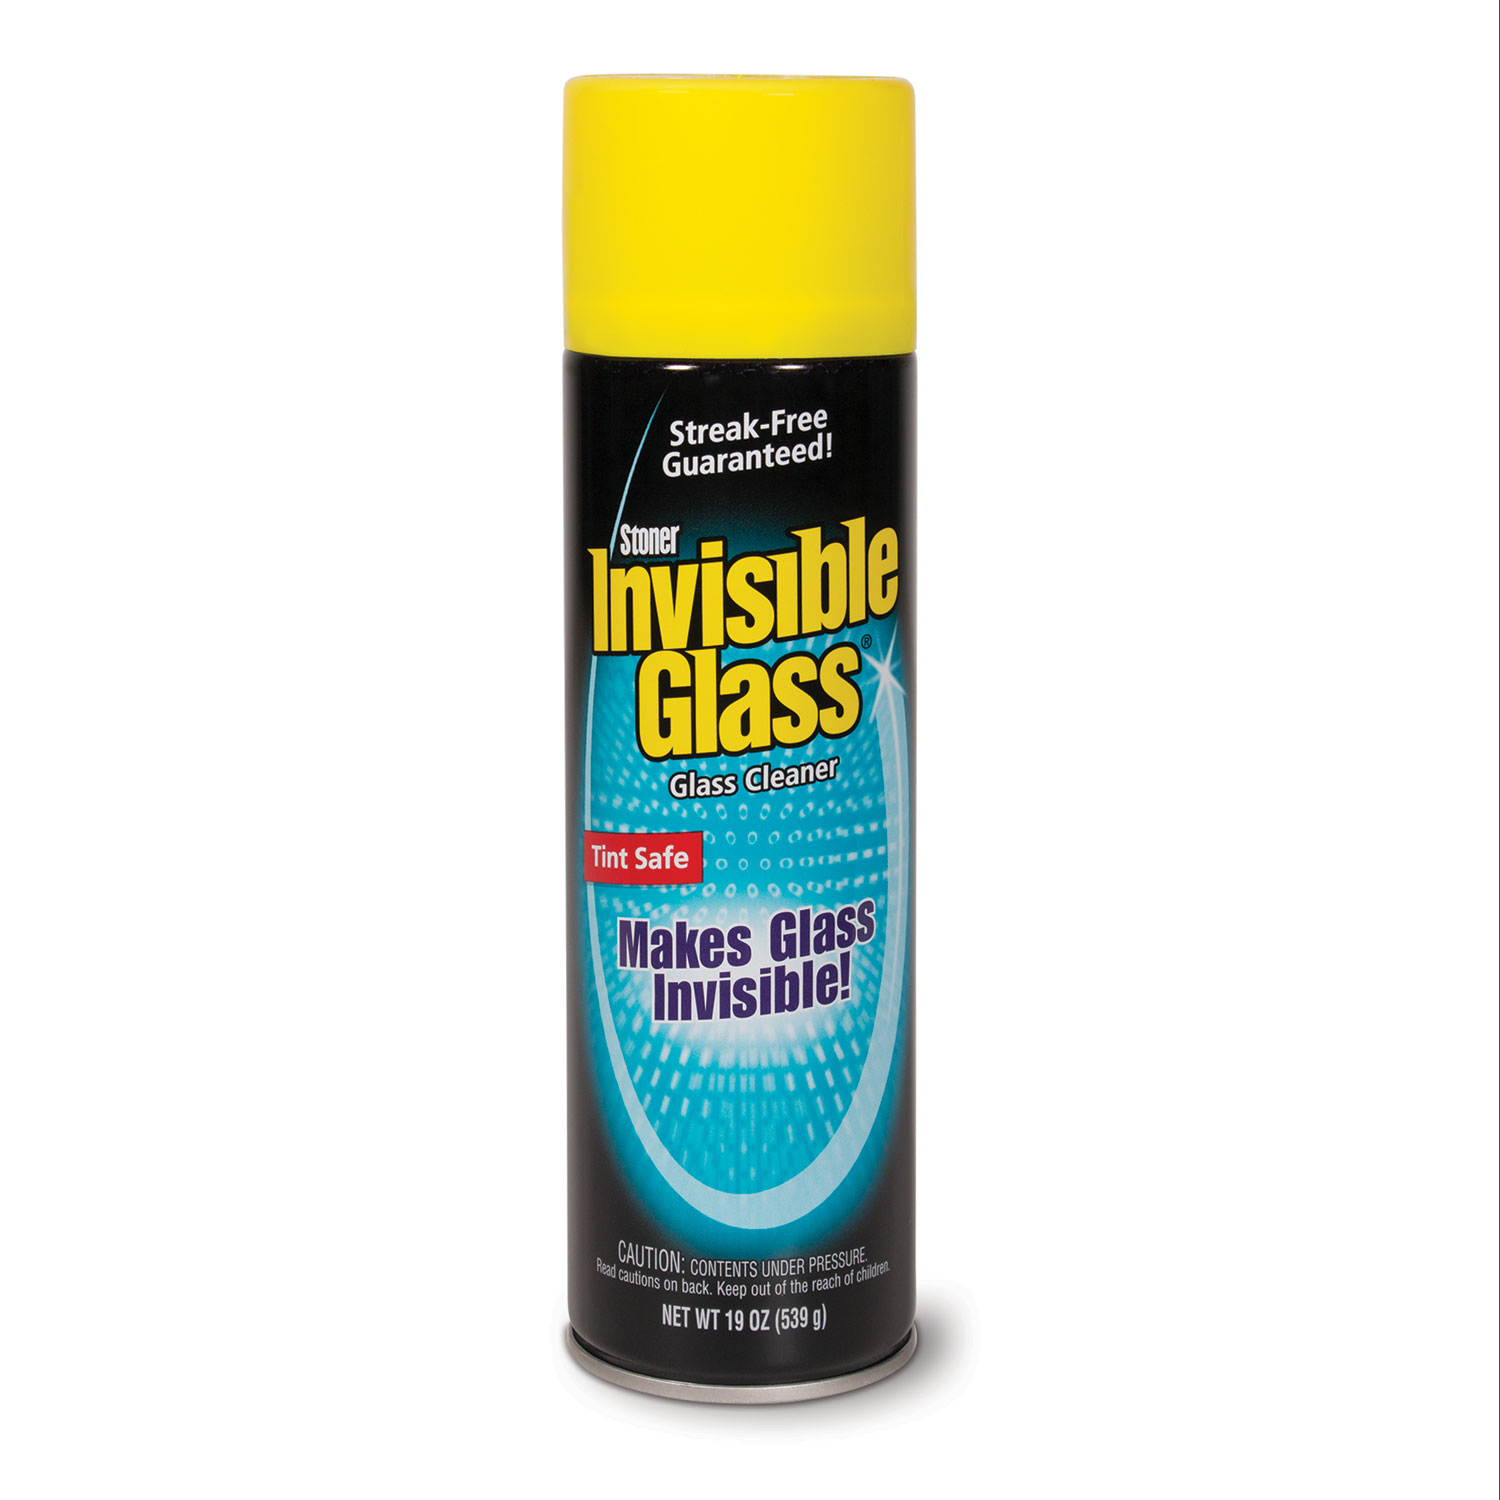  Invisible Glass 7-93165-91164-8 Premium Glass Cleaner, 19 oz Aerosol, 6/Carton (IVG91166) 